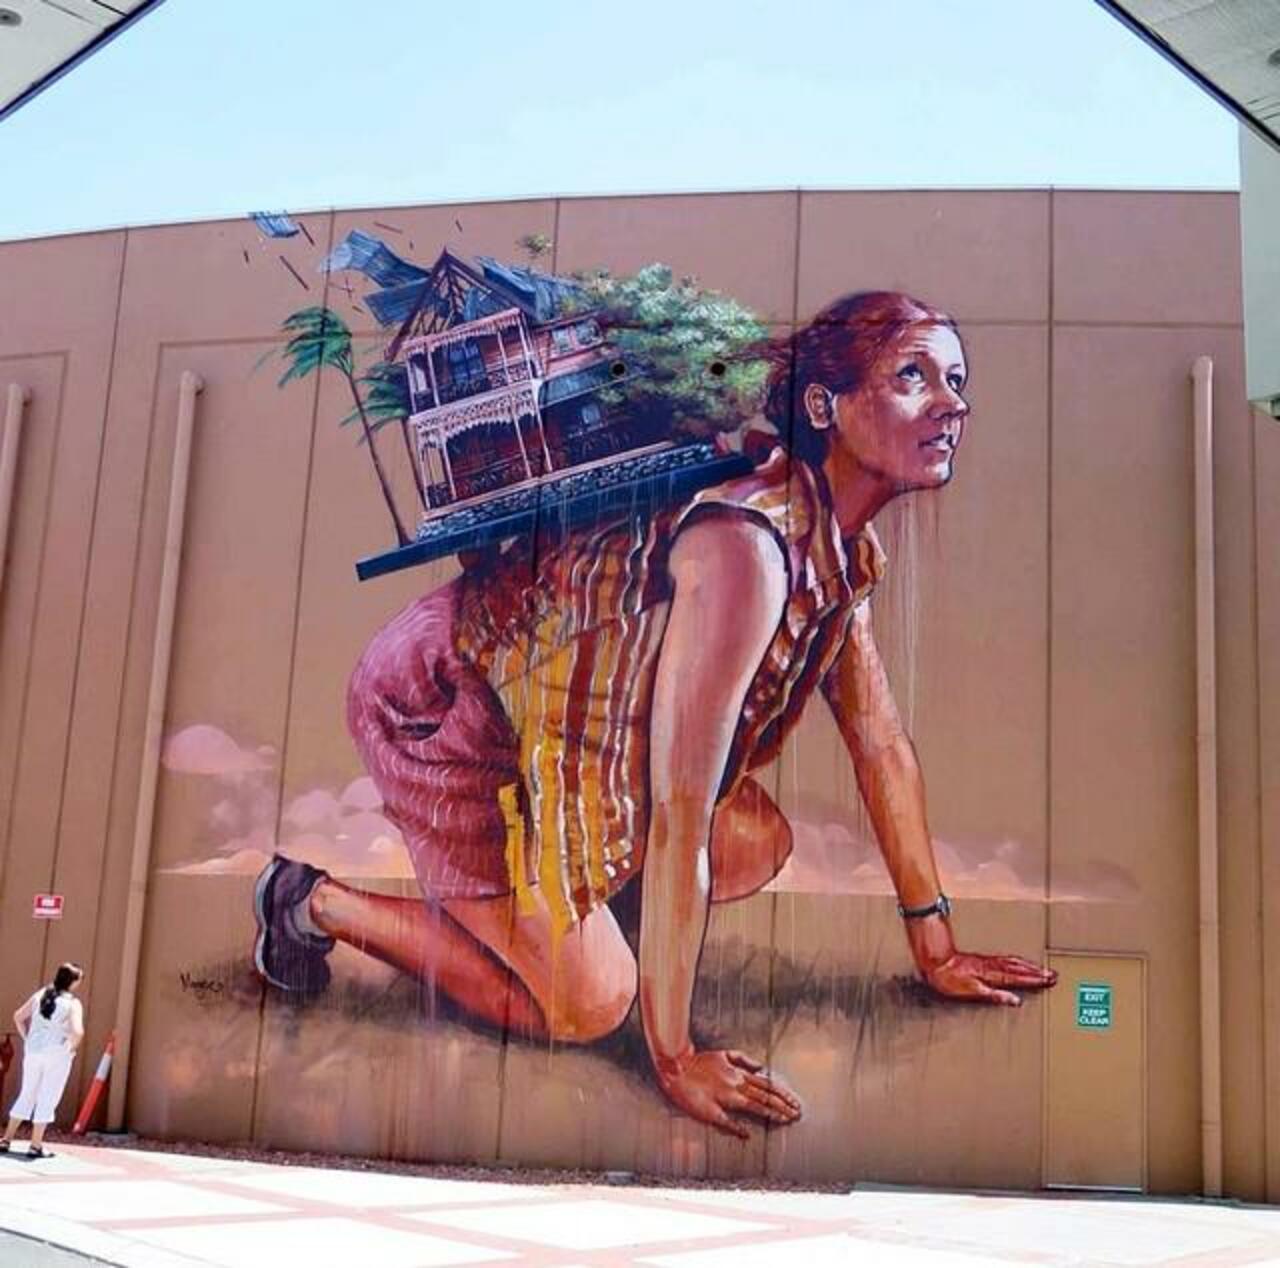 Latest Fintan Magee massive Street Art piece in Bunbury, Western Australia 

#art #graffiti #mural #streetart http://t.co/vLH48AVnkd